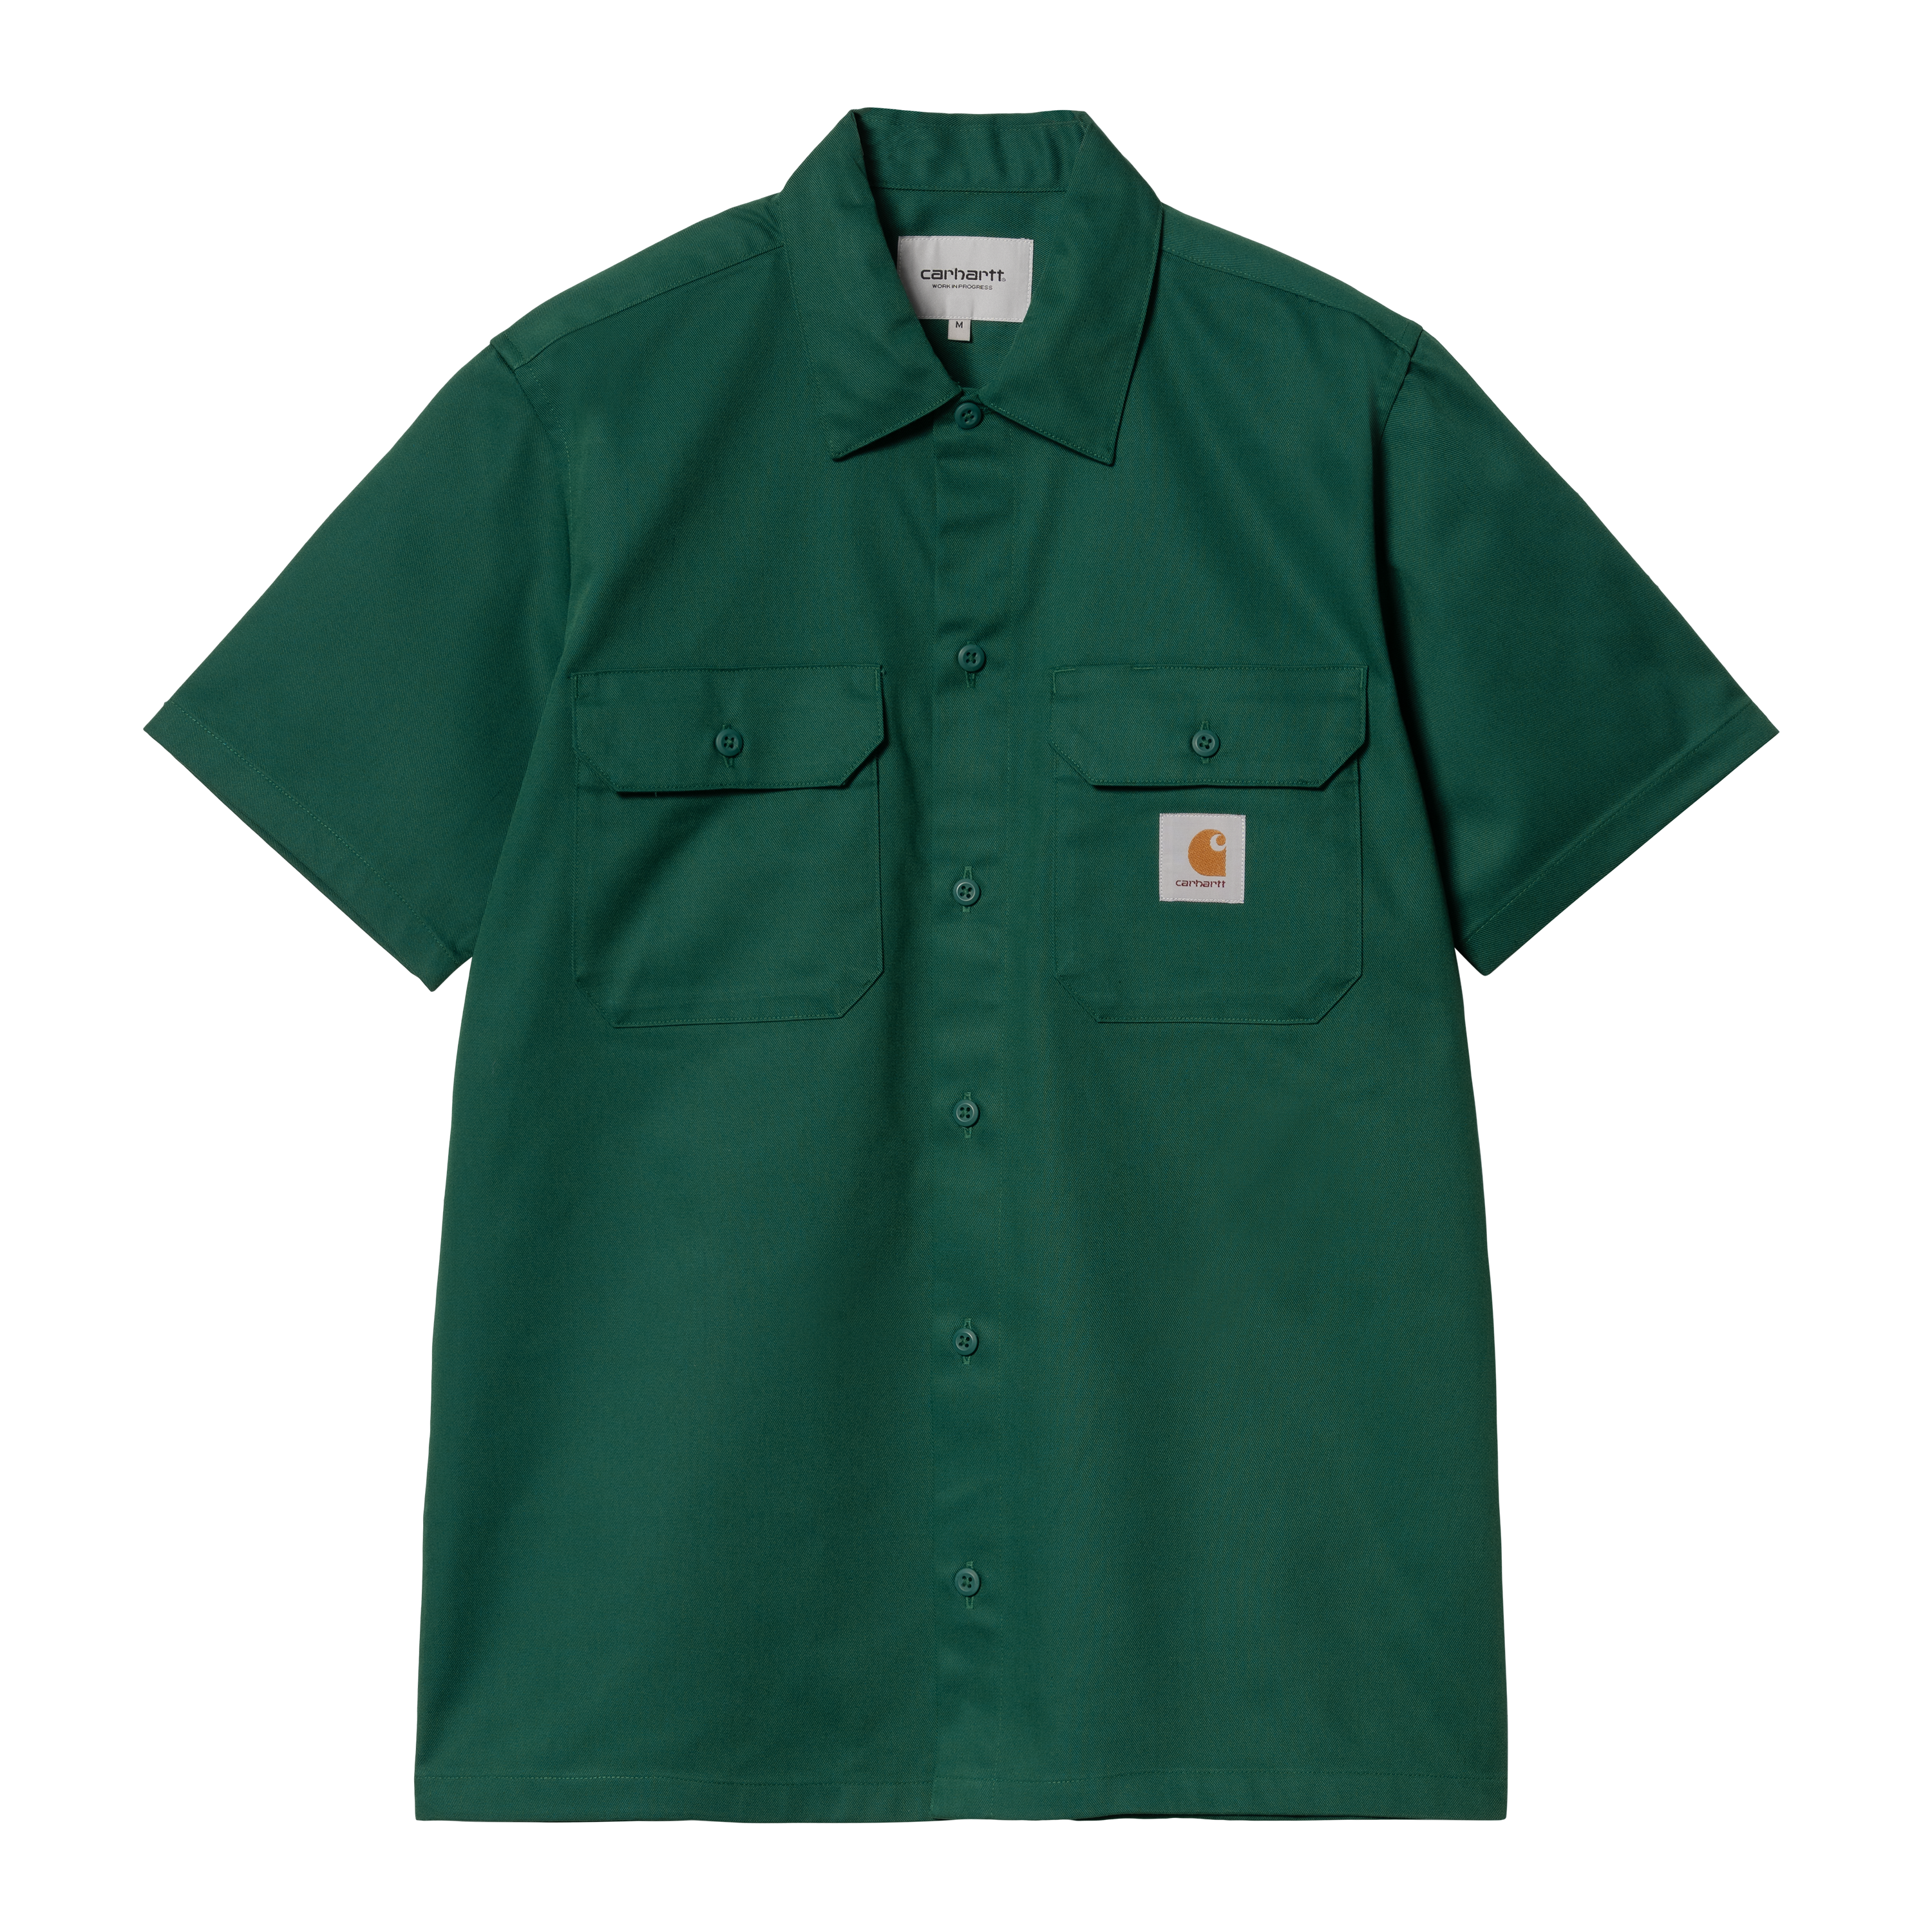 Carhartt WIP Short Sleeve Master Shirt in Verde